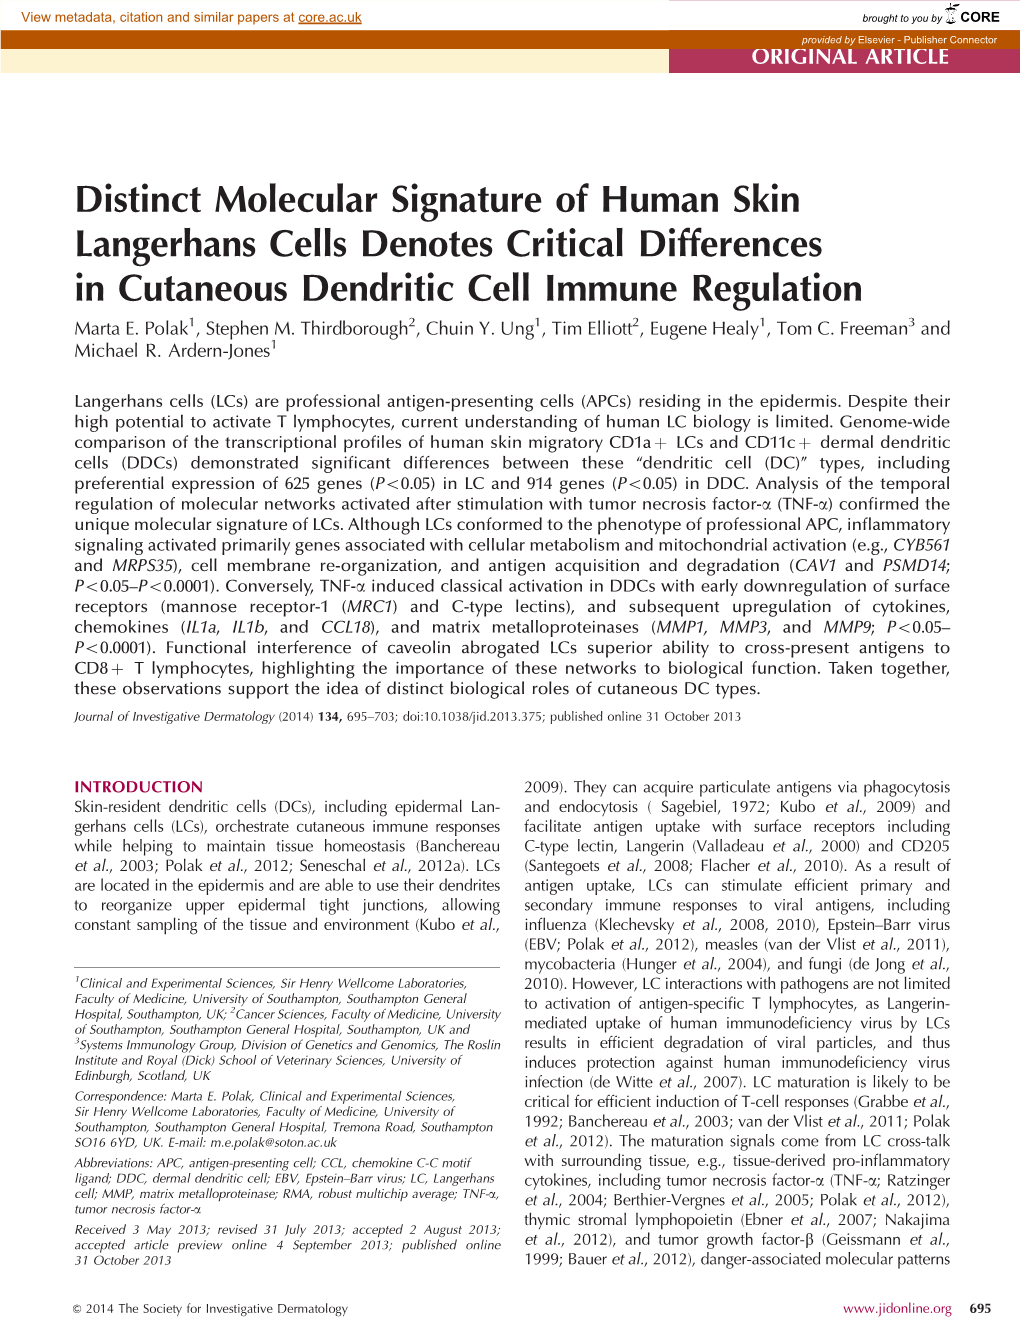 Distinct Molecular Signature of Human Skin Langerhans Cells Denotes Critical Differences in Cutaneous Dendritic Cell Immune Regulation Marta E